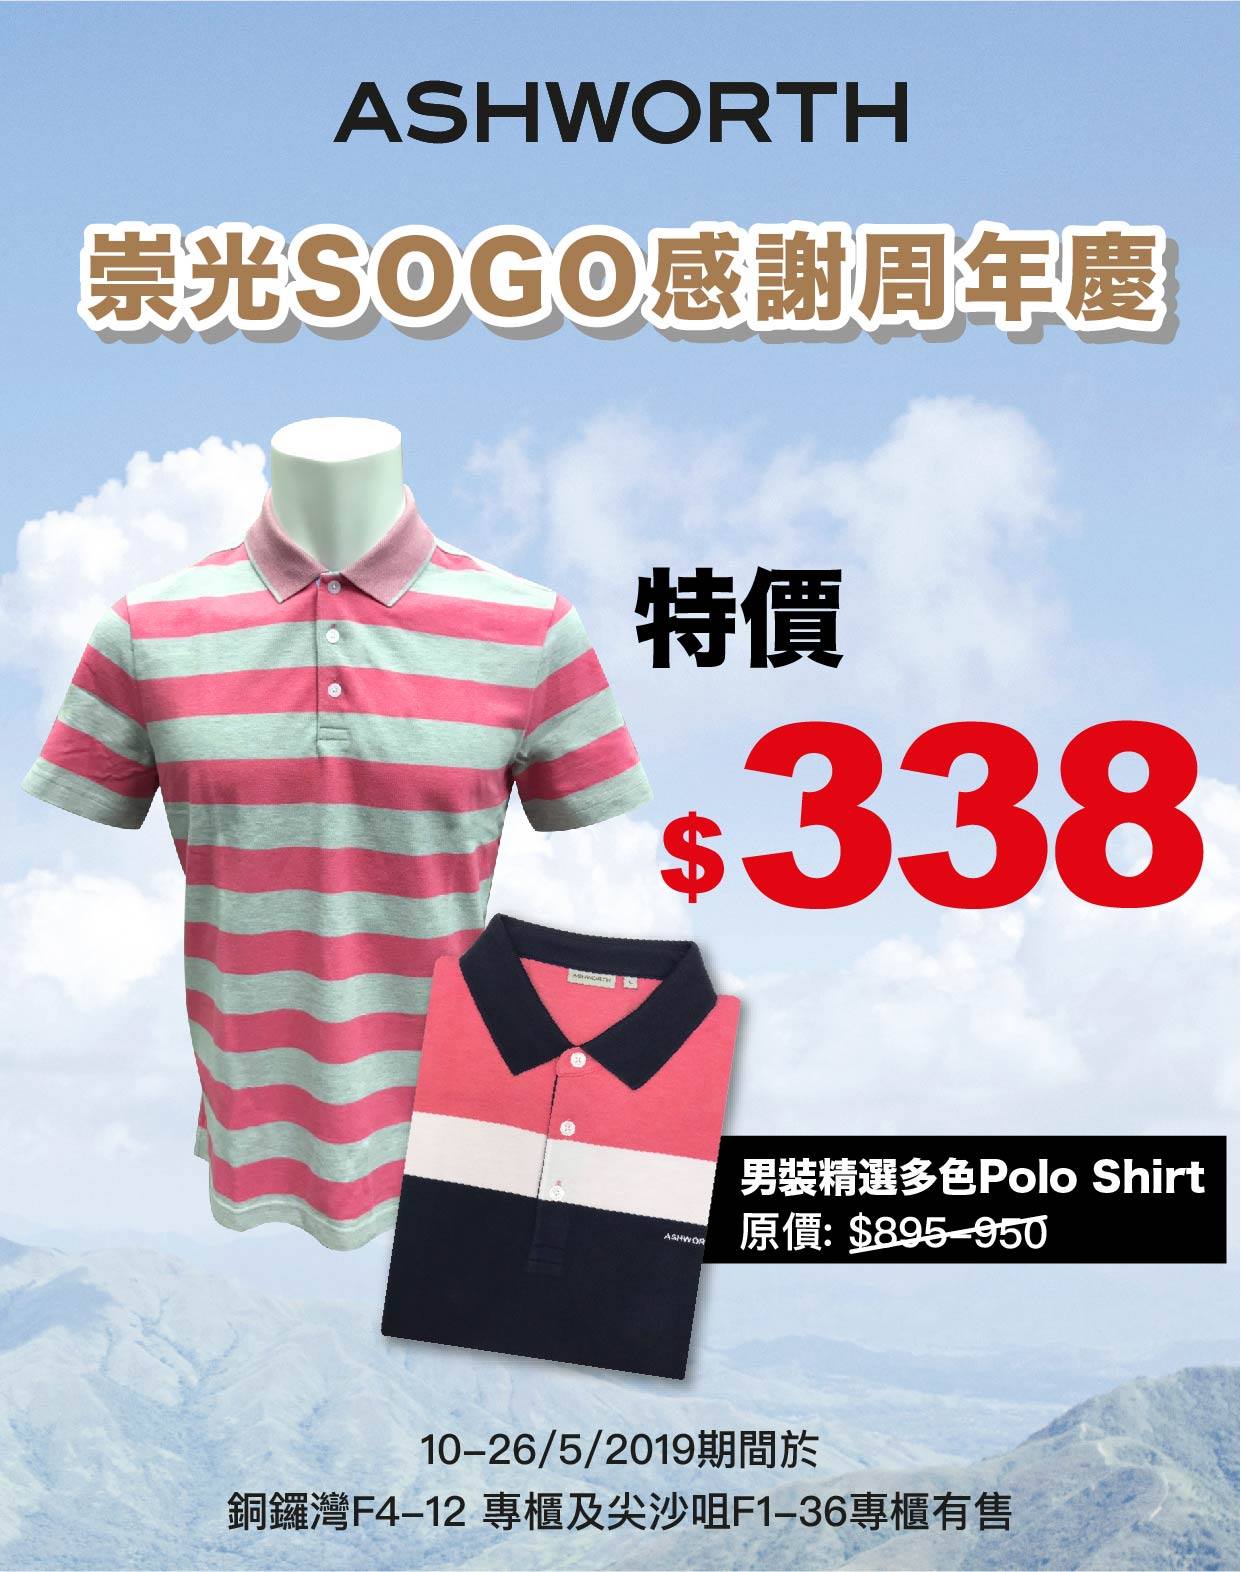 Ashworth 男裝精選 Polo Shirt 👔 特價 $338，多種顏色可供選擇。